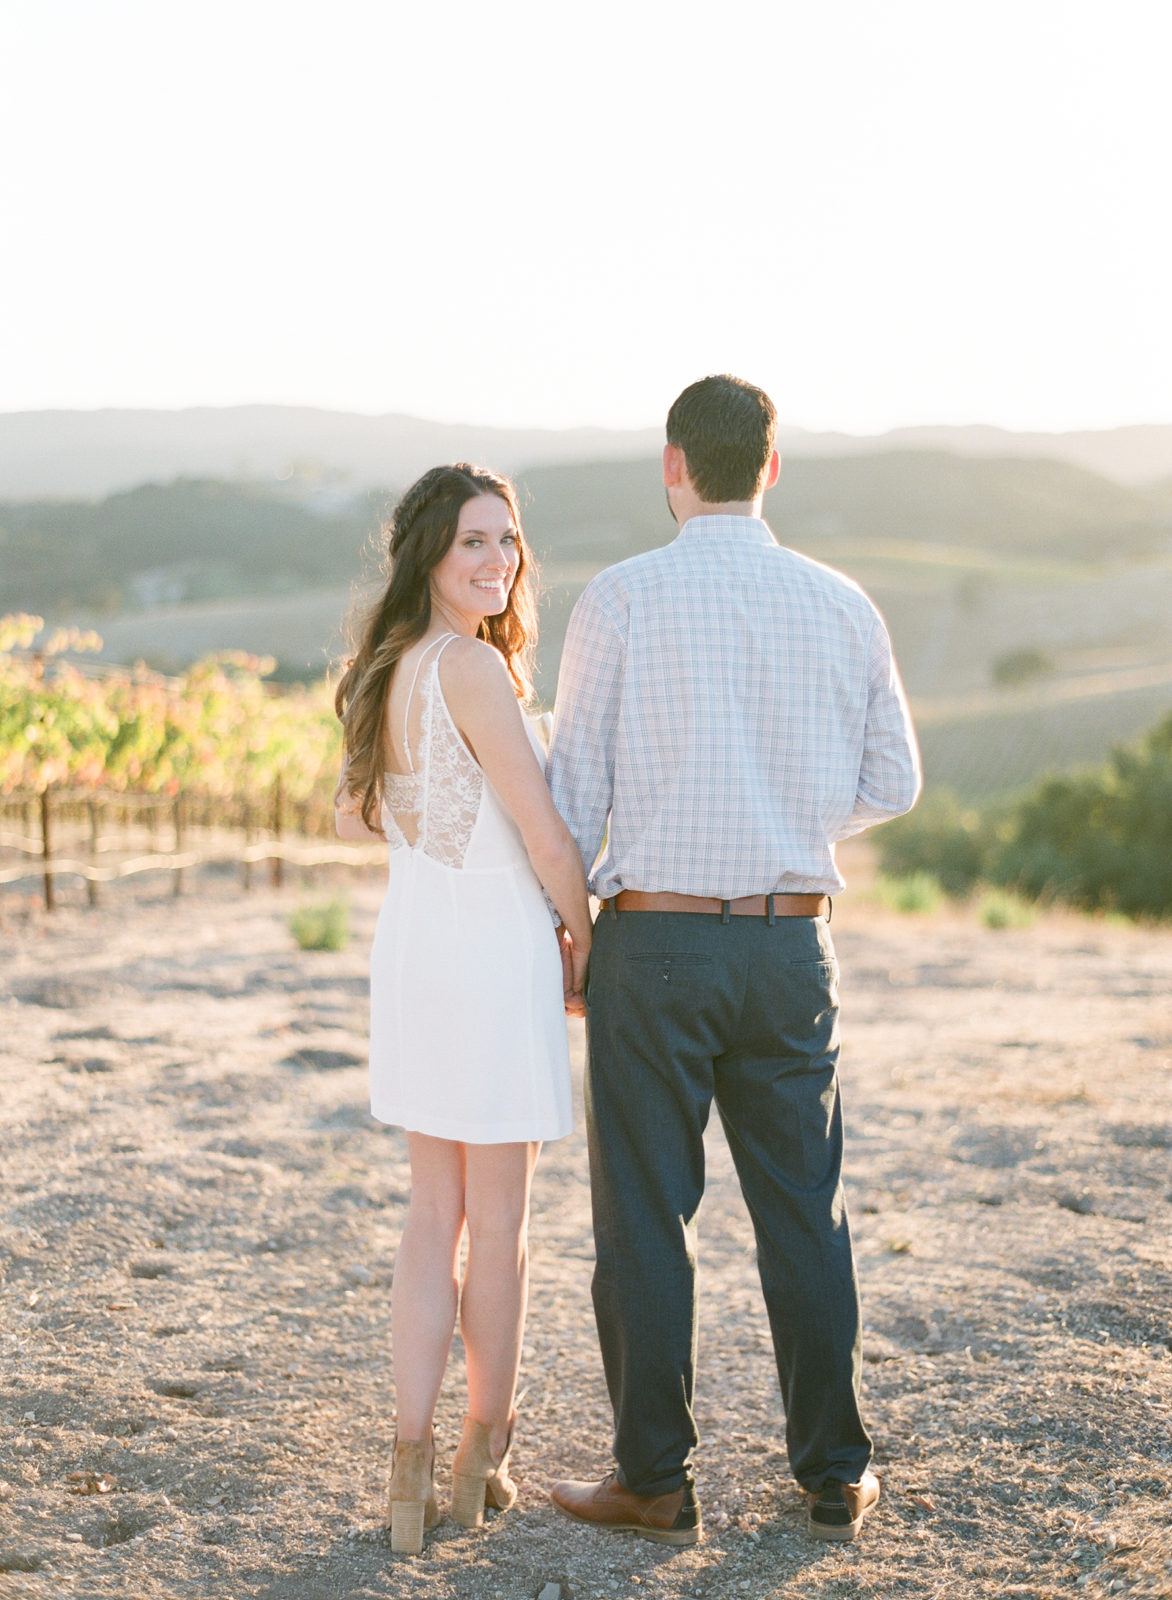 Best Engagement Photos of 2018 | Fine Art Film Photography | Destination Wedding Photographer | Molly Carr Photography | Engagement Session | Pre-Wedding Photos | California Engagement Photos | Wine Country Engagement